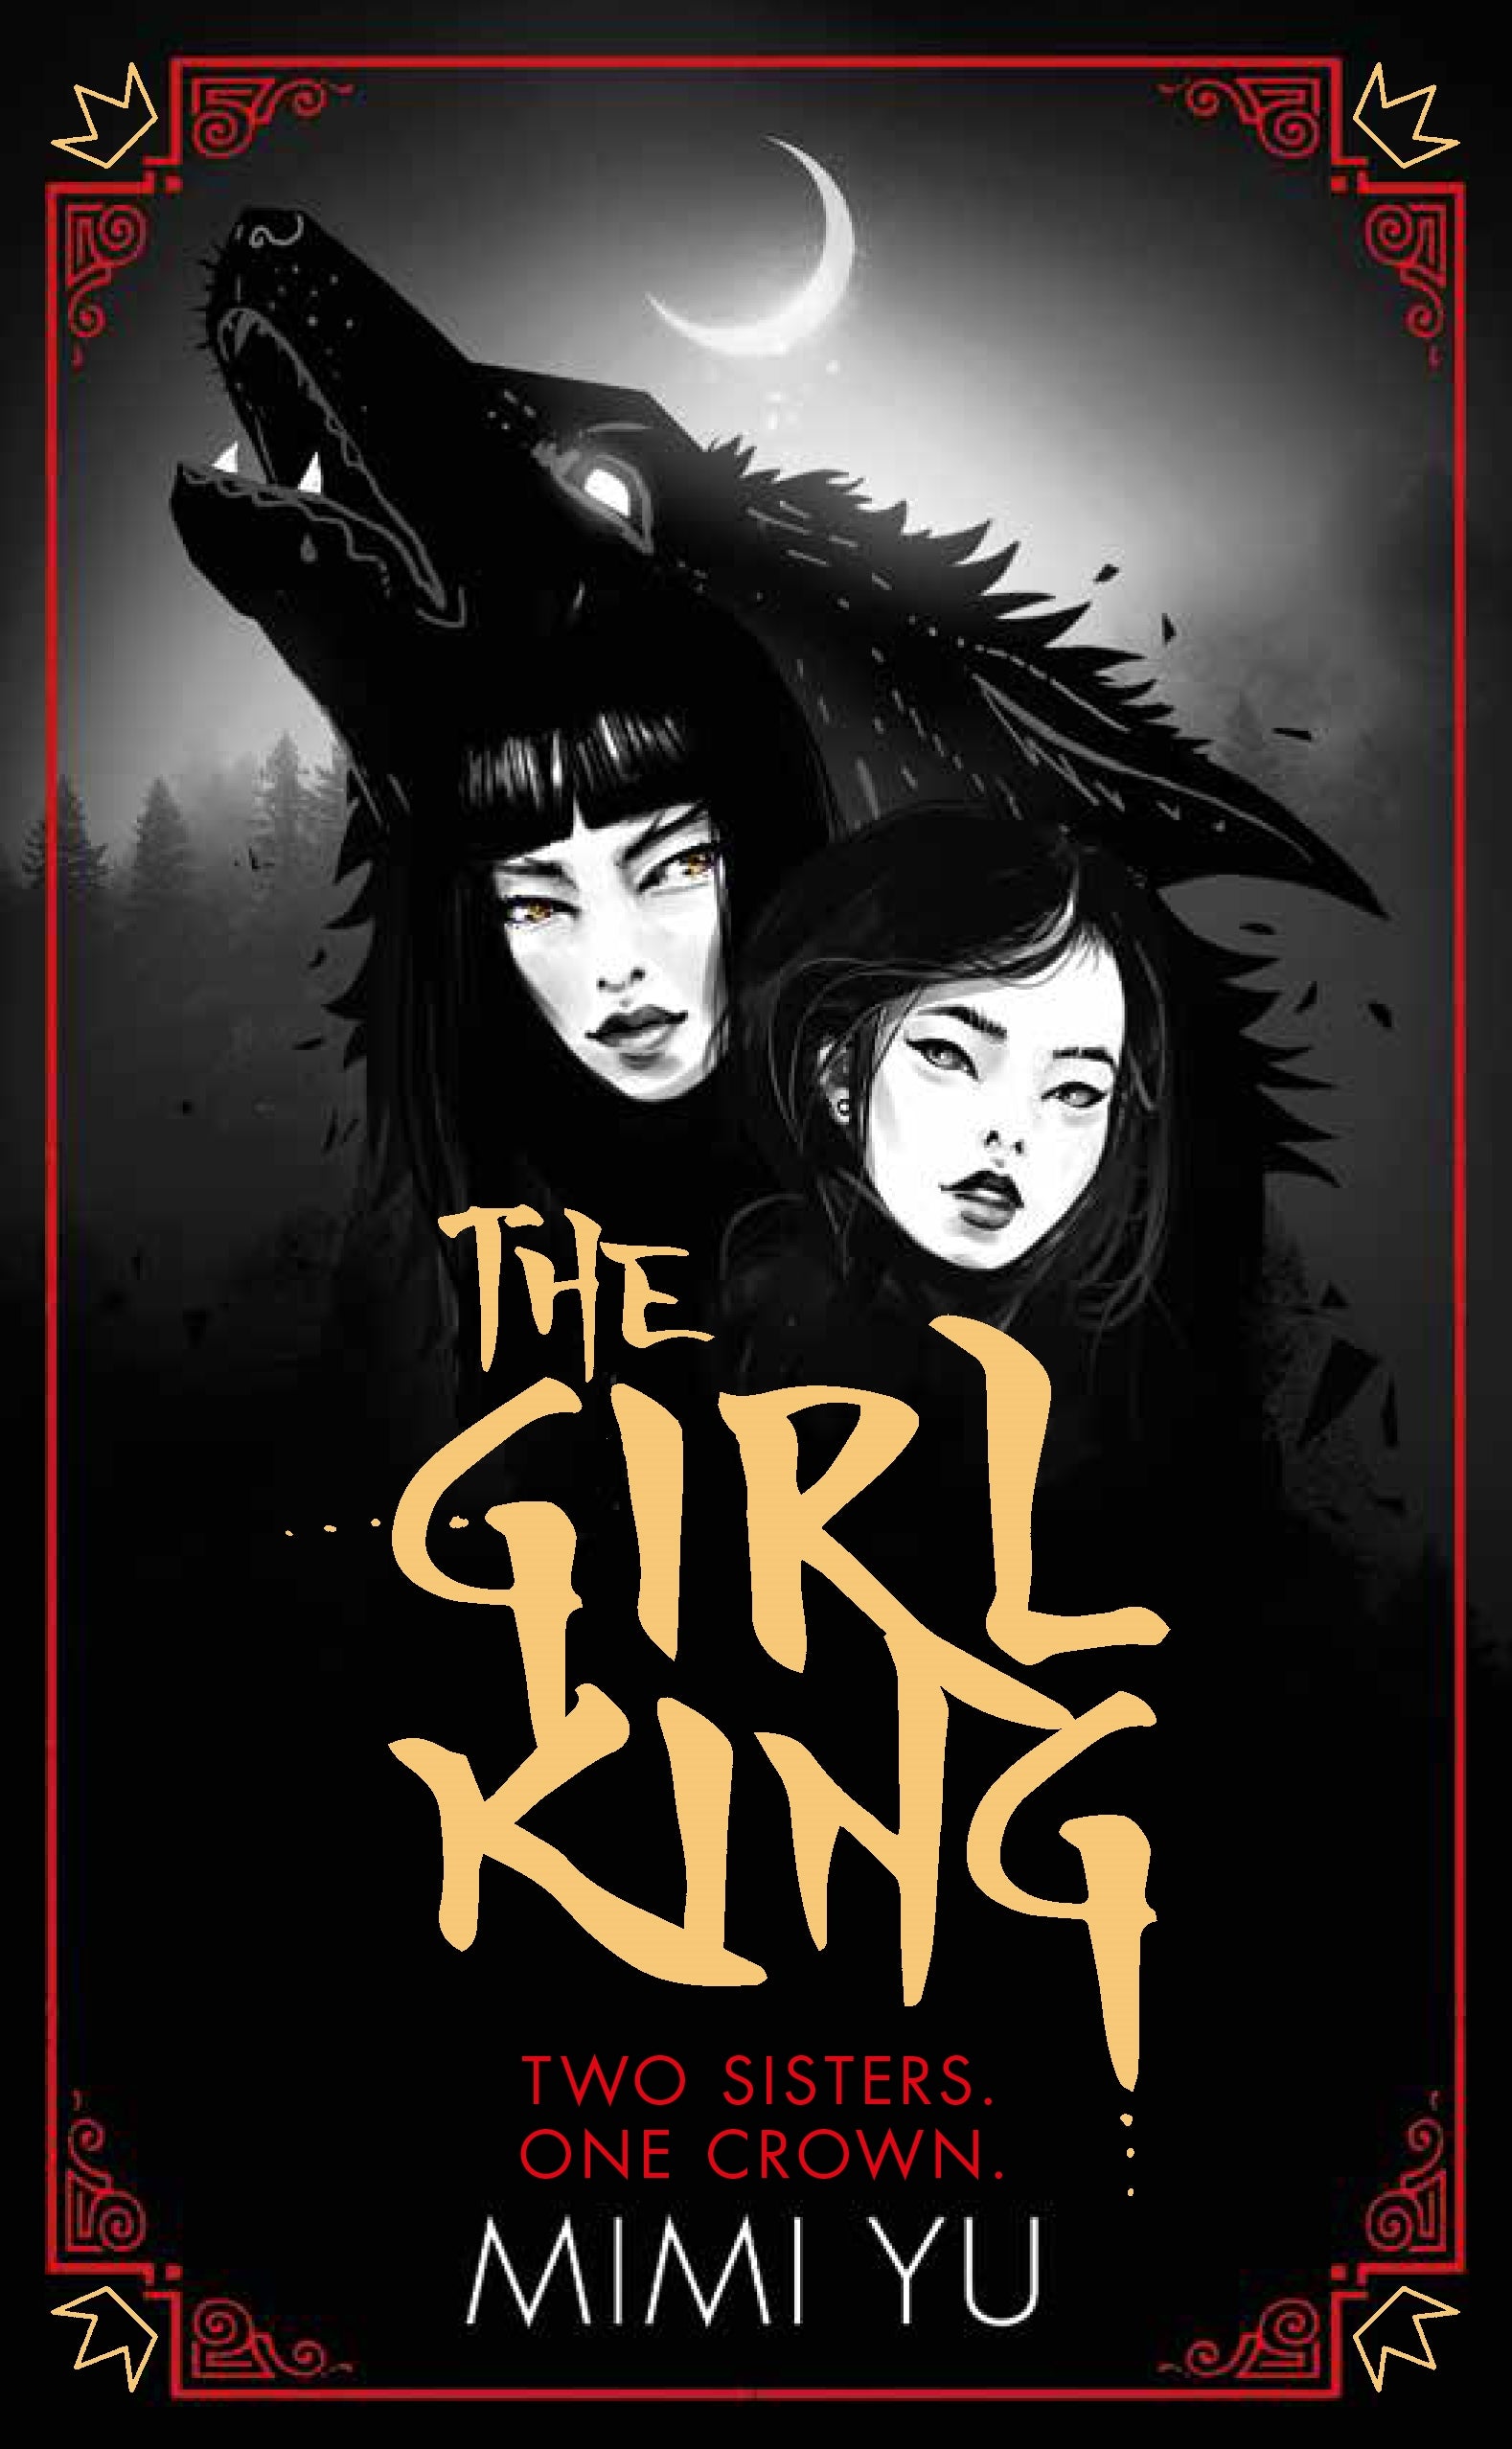 The Girl King by Mimi Yu